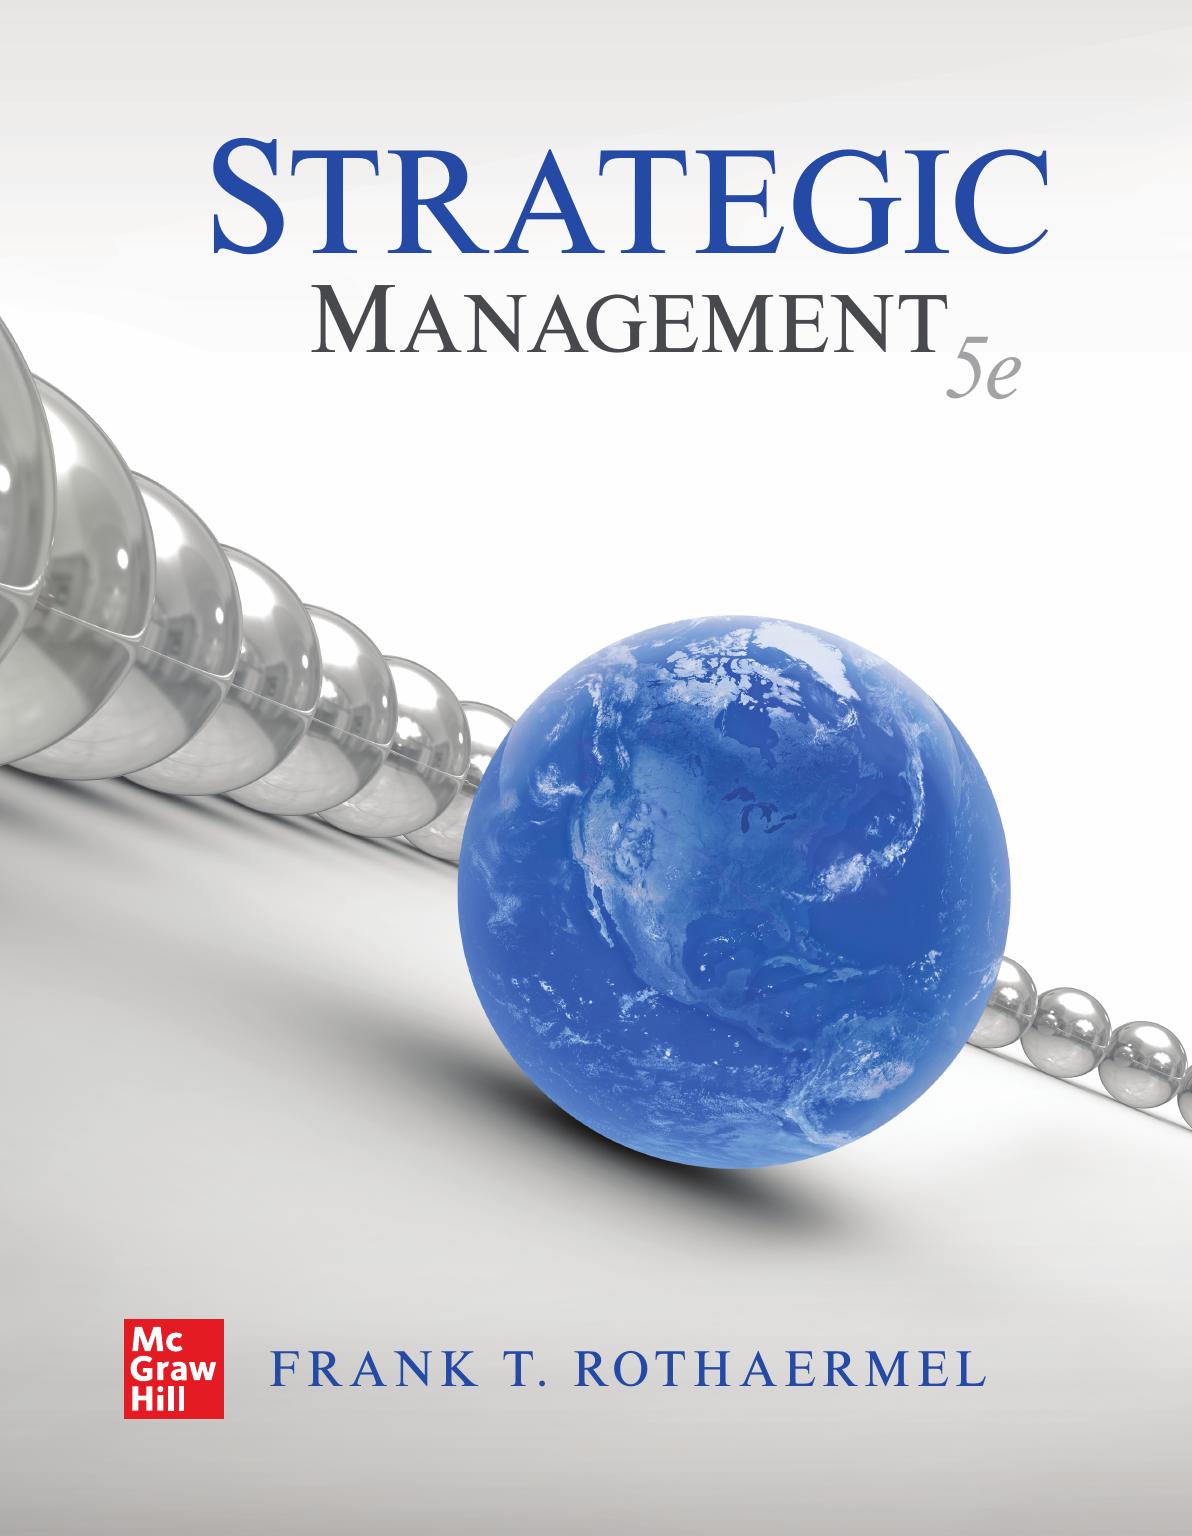 Strategic Management 5th Edition by Frank Rothaermel 120Yuan.jpg